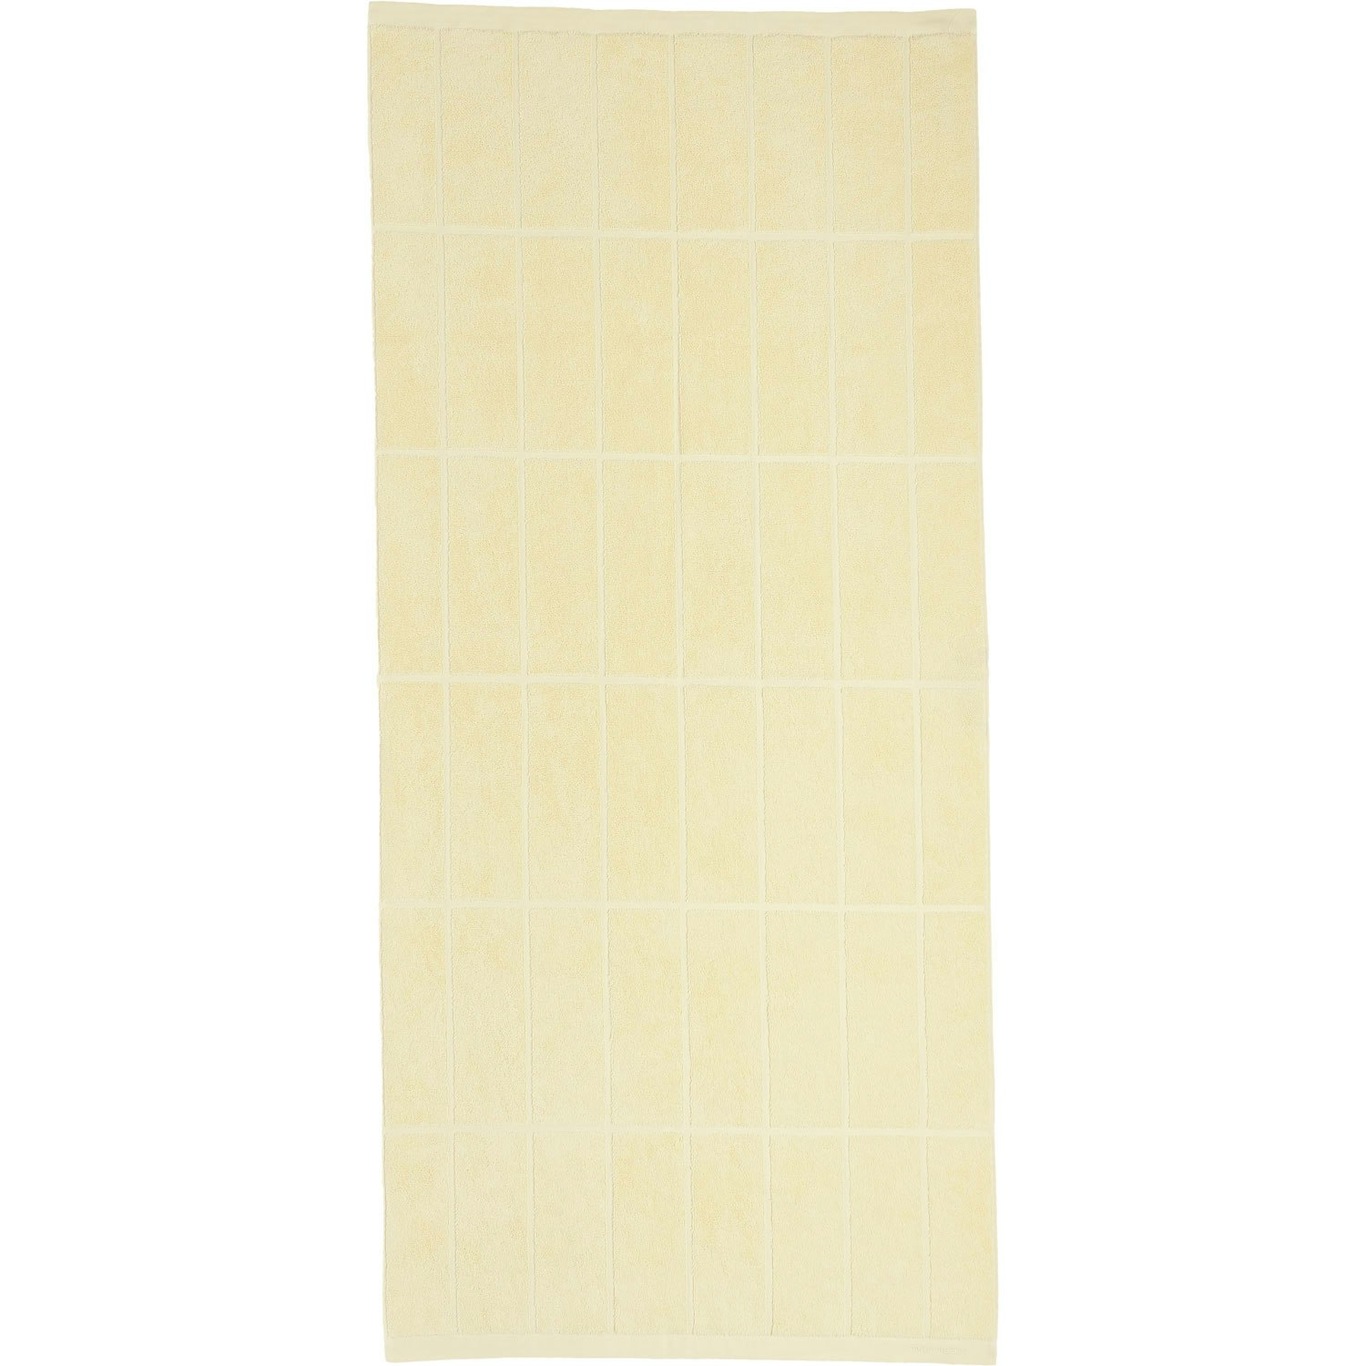 Tiiliskivi Håndklæde 70x150 cm, Butter Yellow